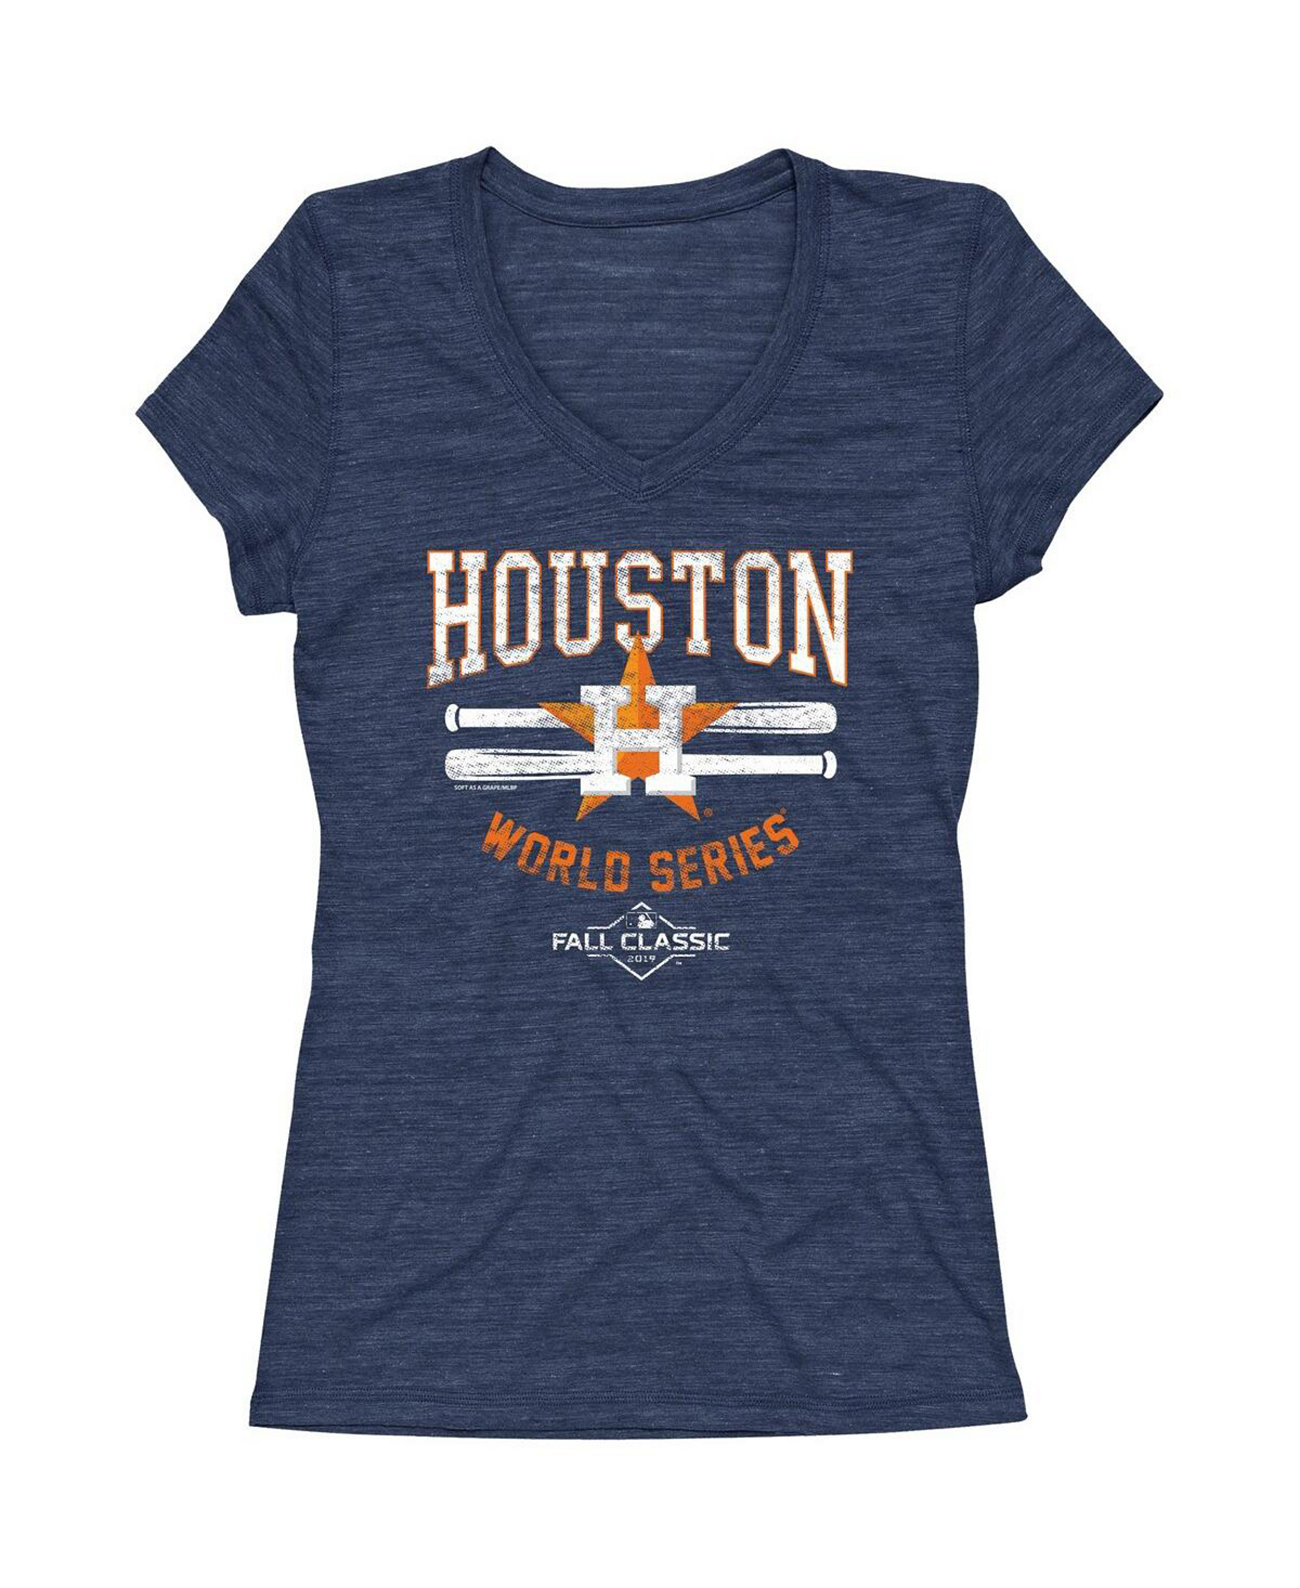 Женская темно-синяя футболка Houston Astros 2019 World Series Bound Tri-Blend с v-образным вырезом Soft As A Grape